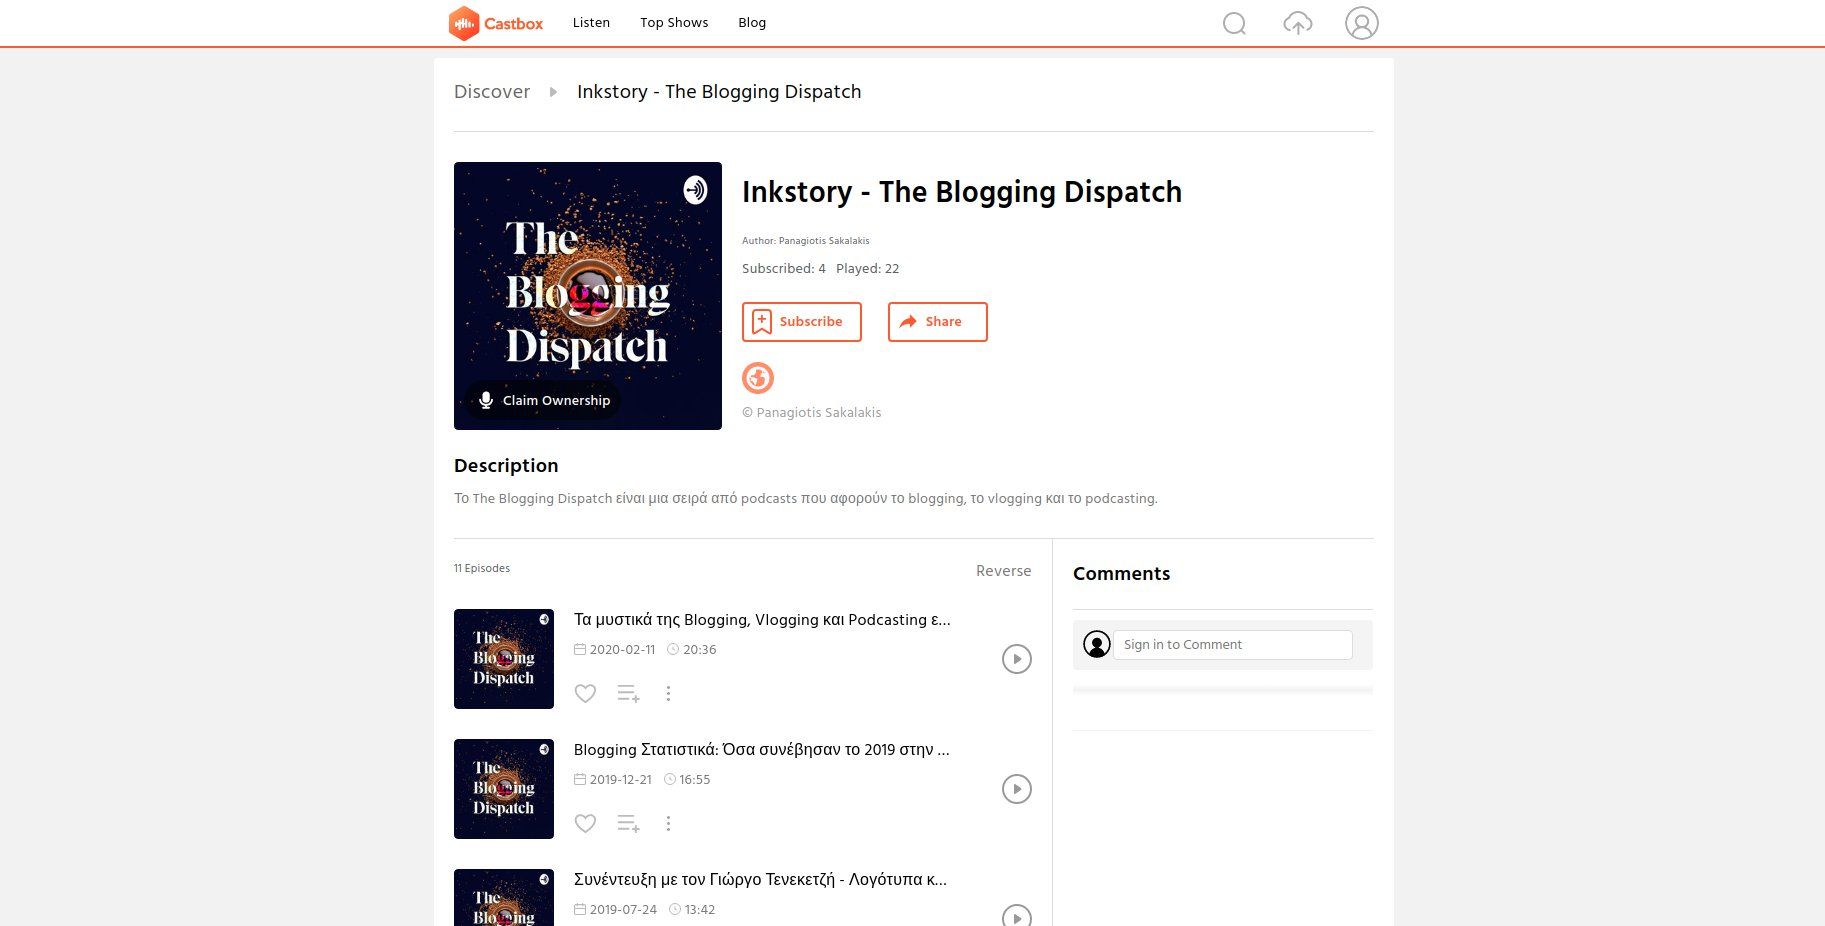 Castbox - Οι καλύτερες streaming υπηρεσίες για να ακούς podcast επεισόδια